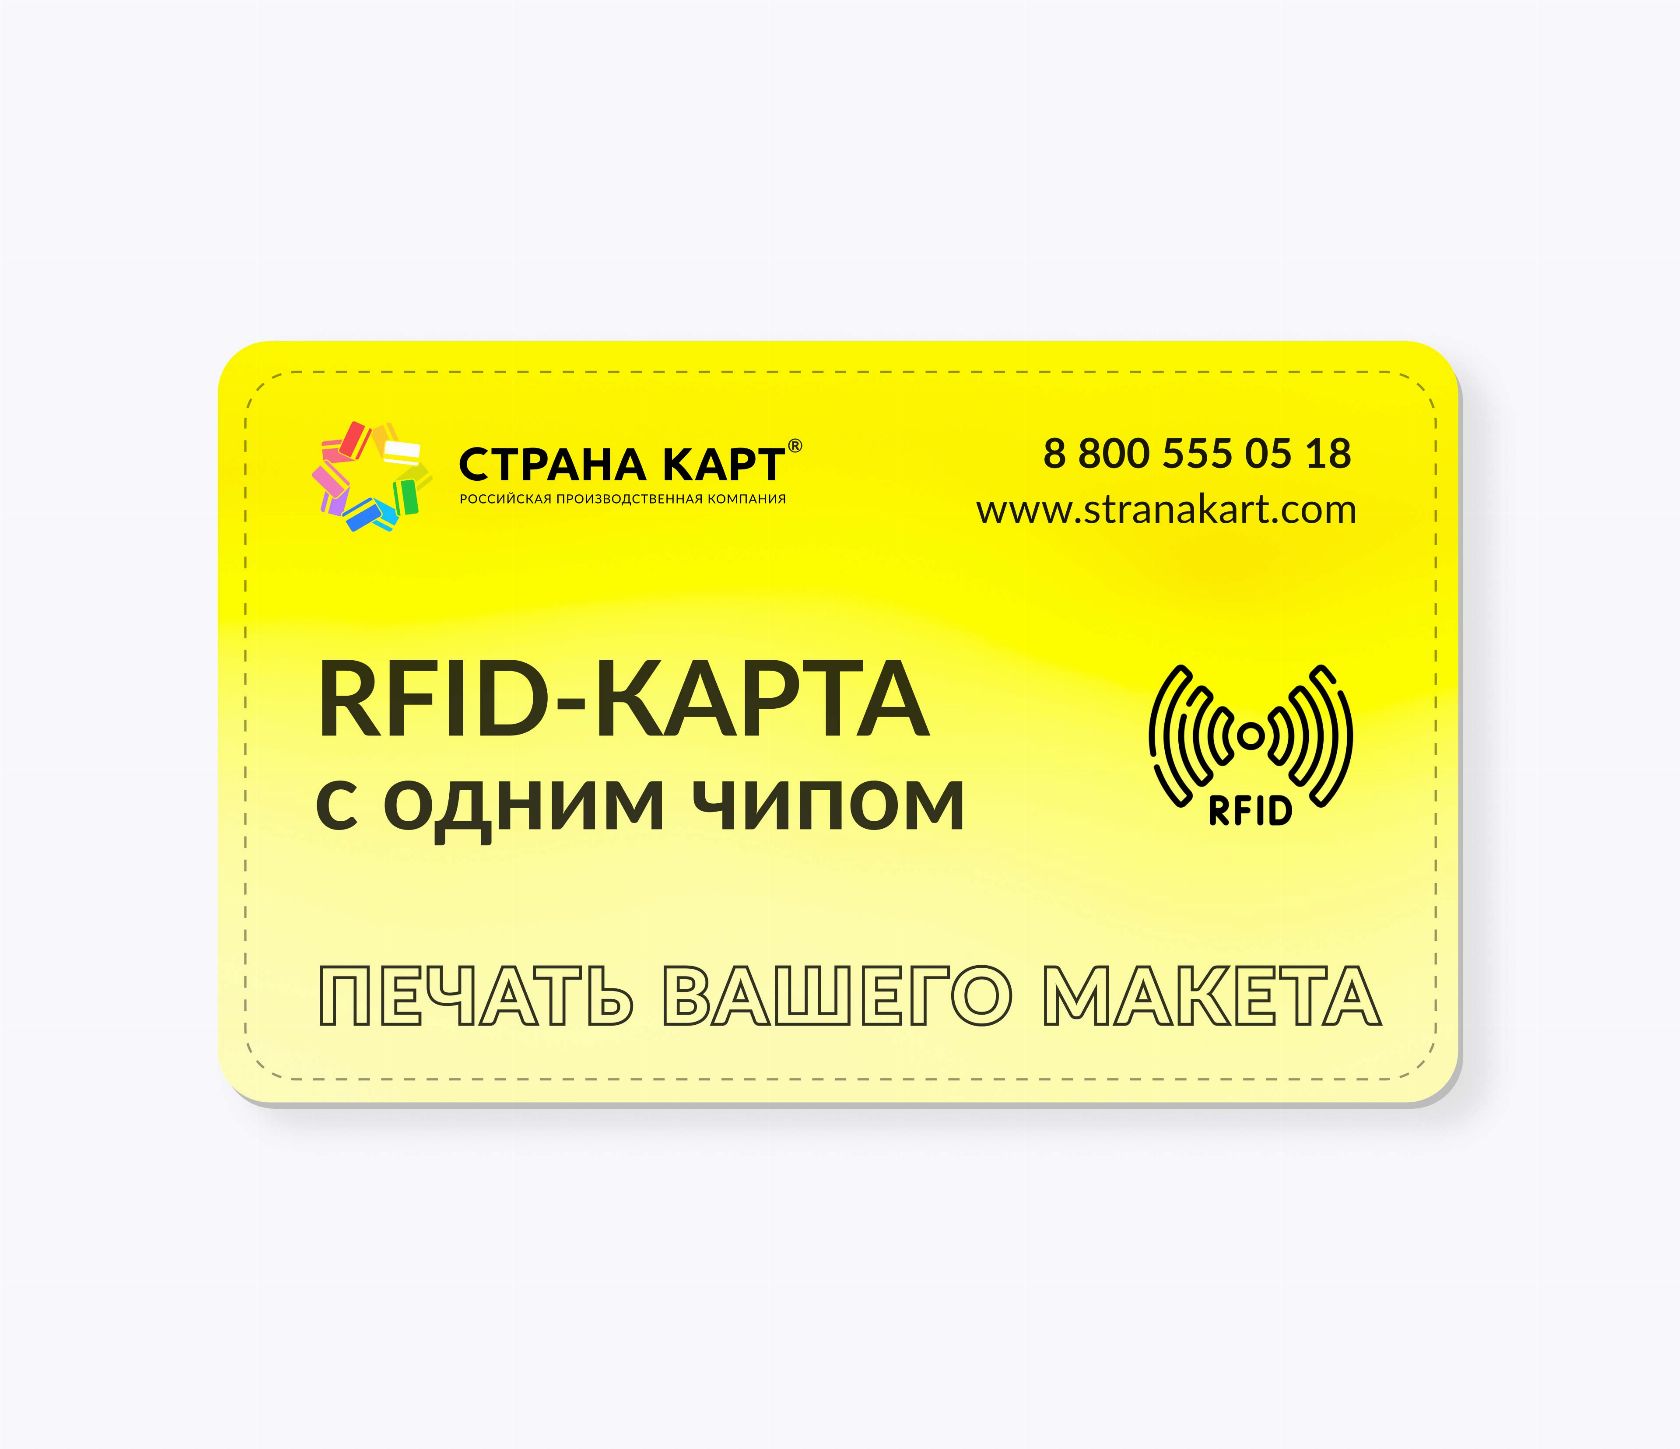 RFID-карты с чипом NXP MIFARE Plus SE 1k 7 byte UID печать вашего макета RFID-карты с чипом NXP MIFARE Plus SE 1k 7 byte UID